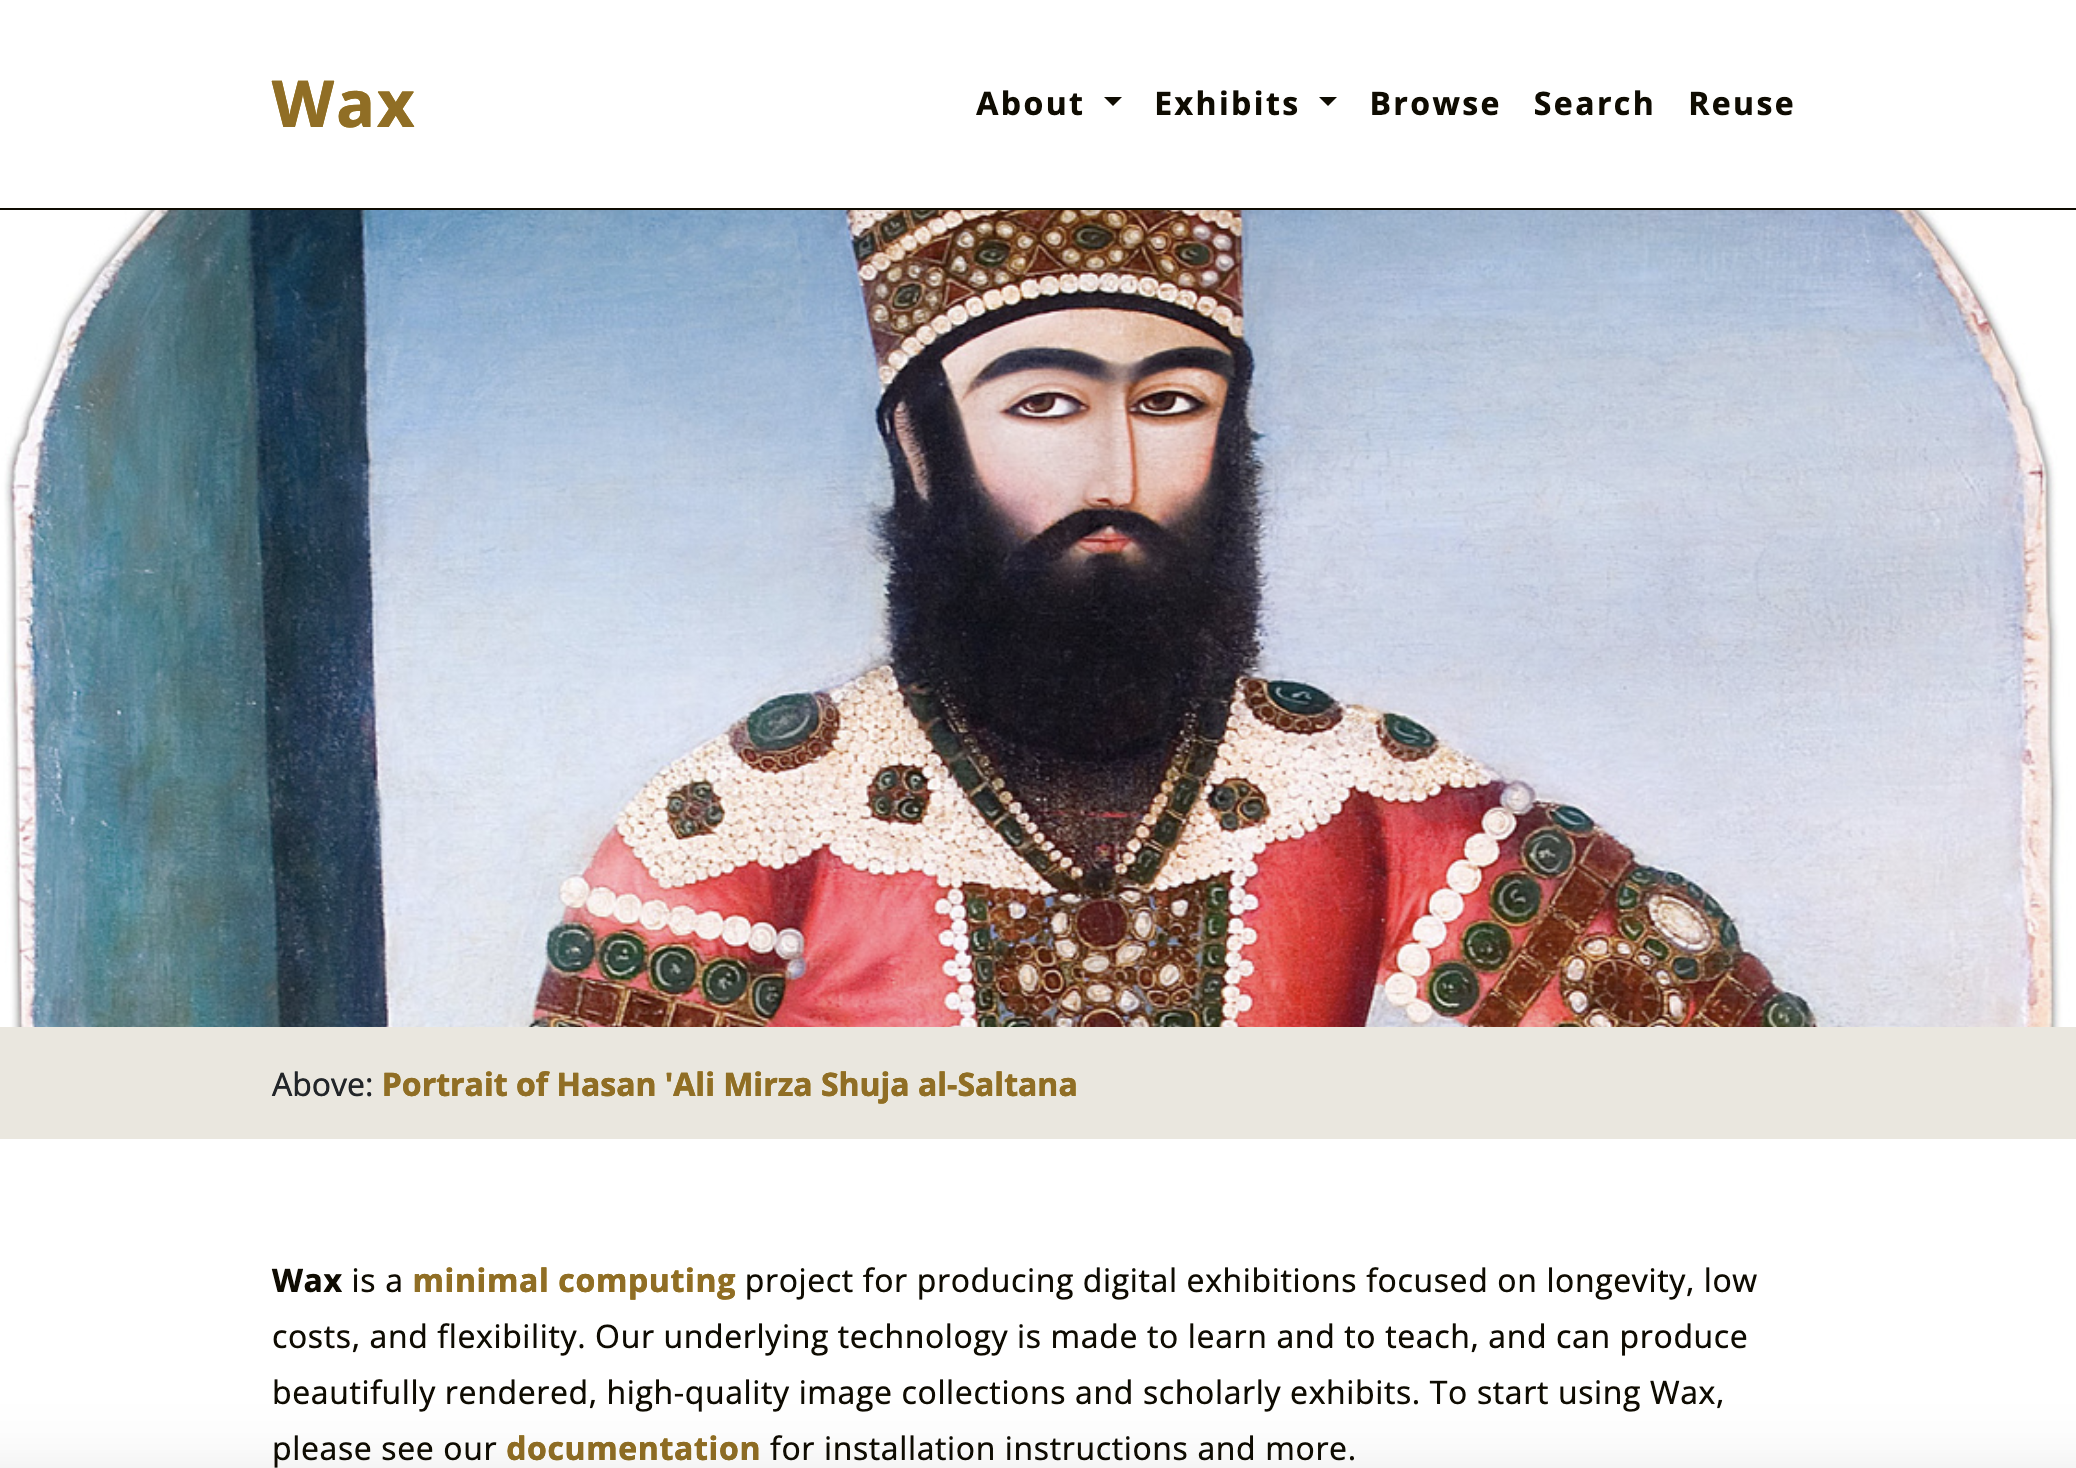 Image portrait of Hasan Ali Mirza Shuja al-Saltana and text describing Wax from homepage.